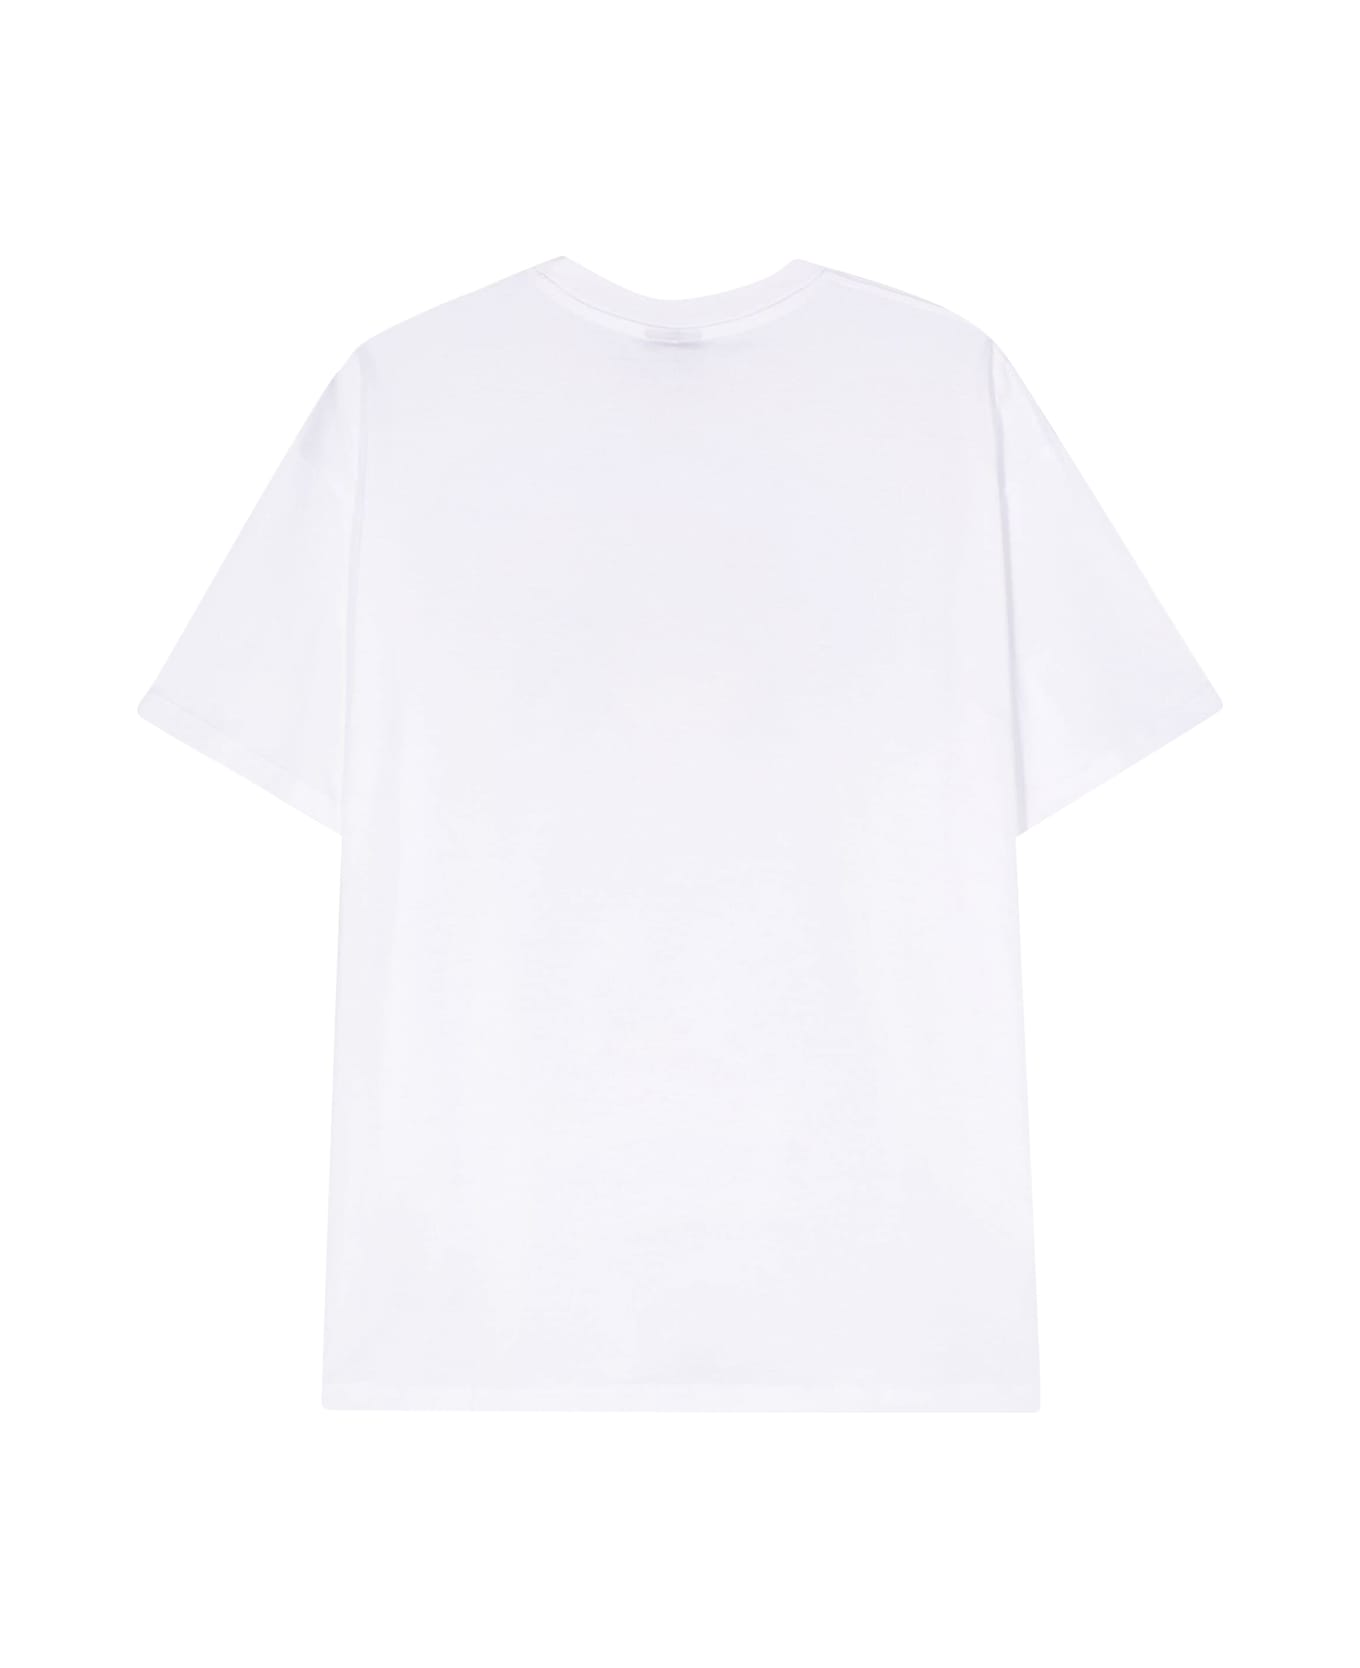 Paul&Shark T-shirt Cotton - White